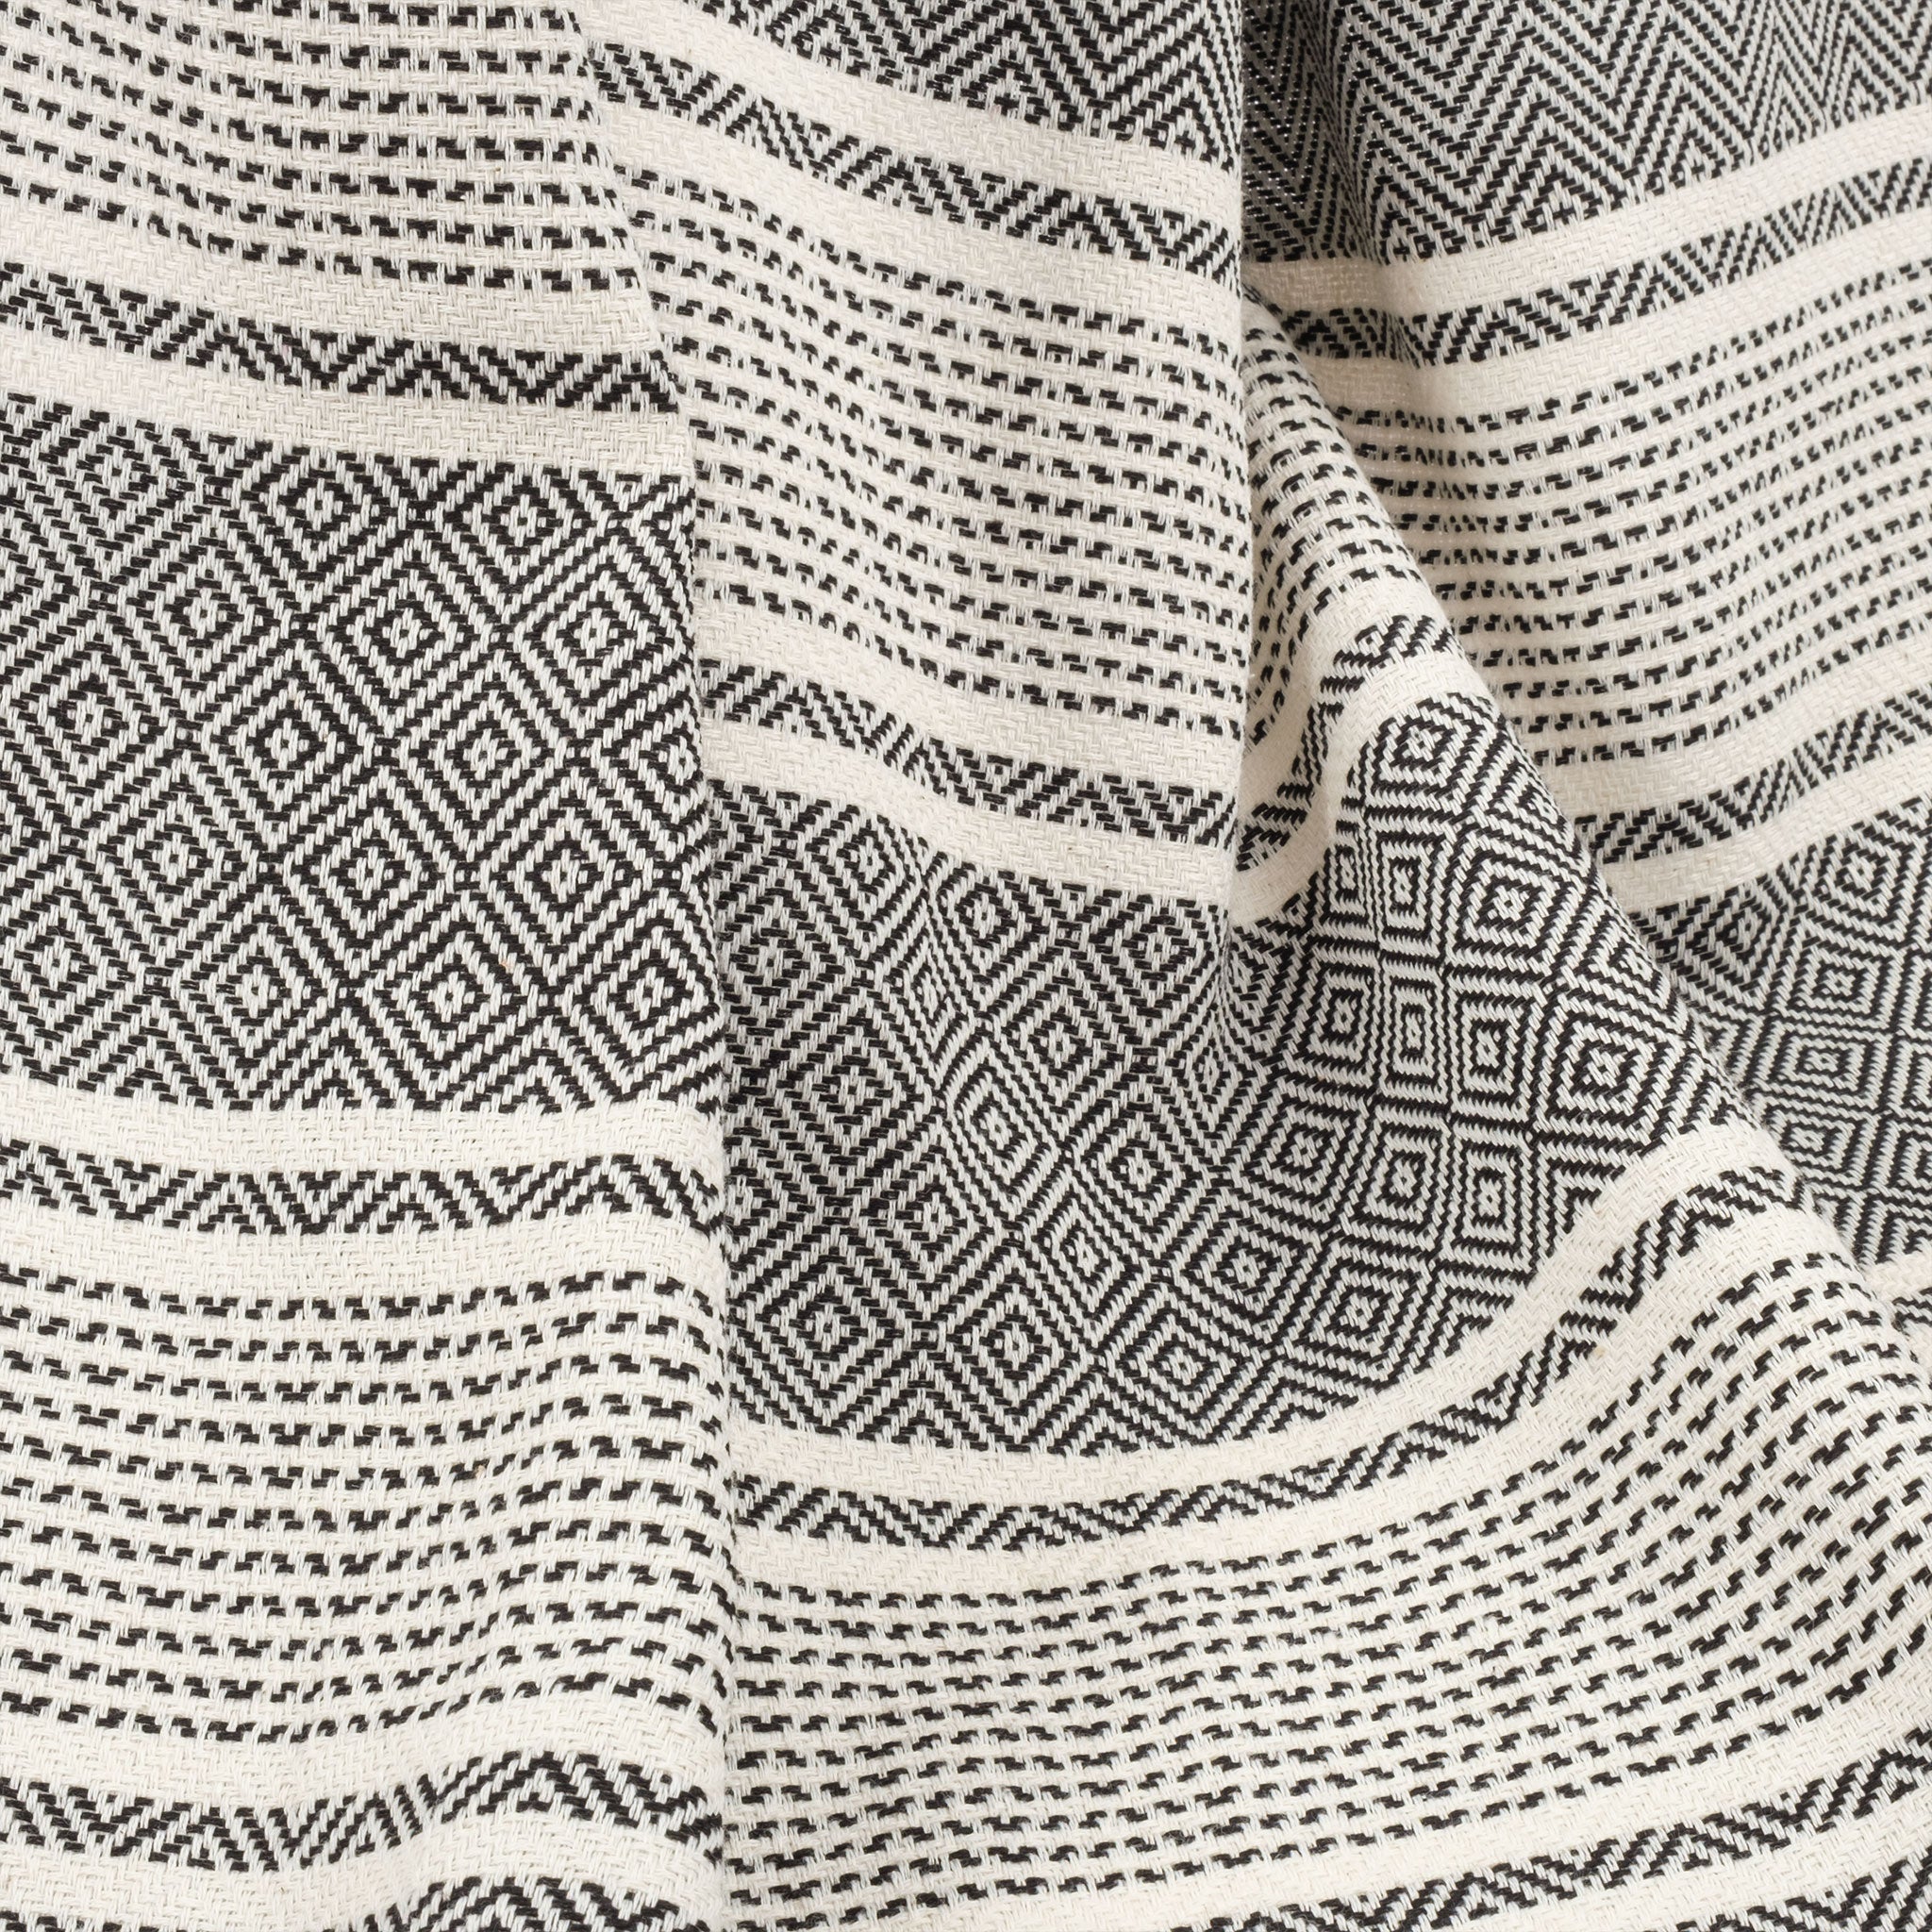 American Soft Linen - 100% Cotton Turkish Peshtemal Towels 40x70 Inches - Black-Striped - 2